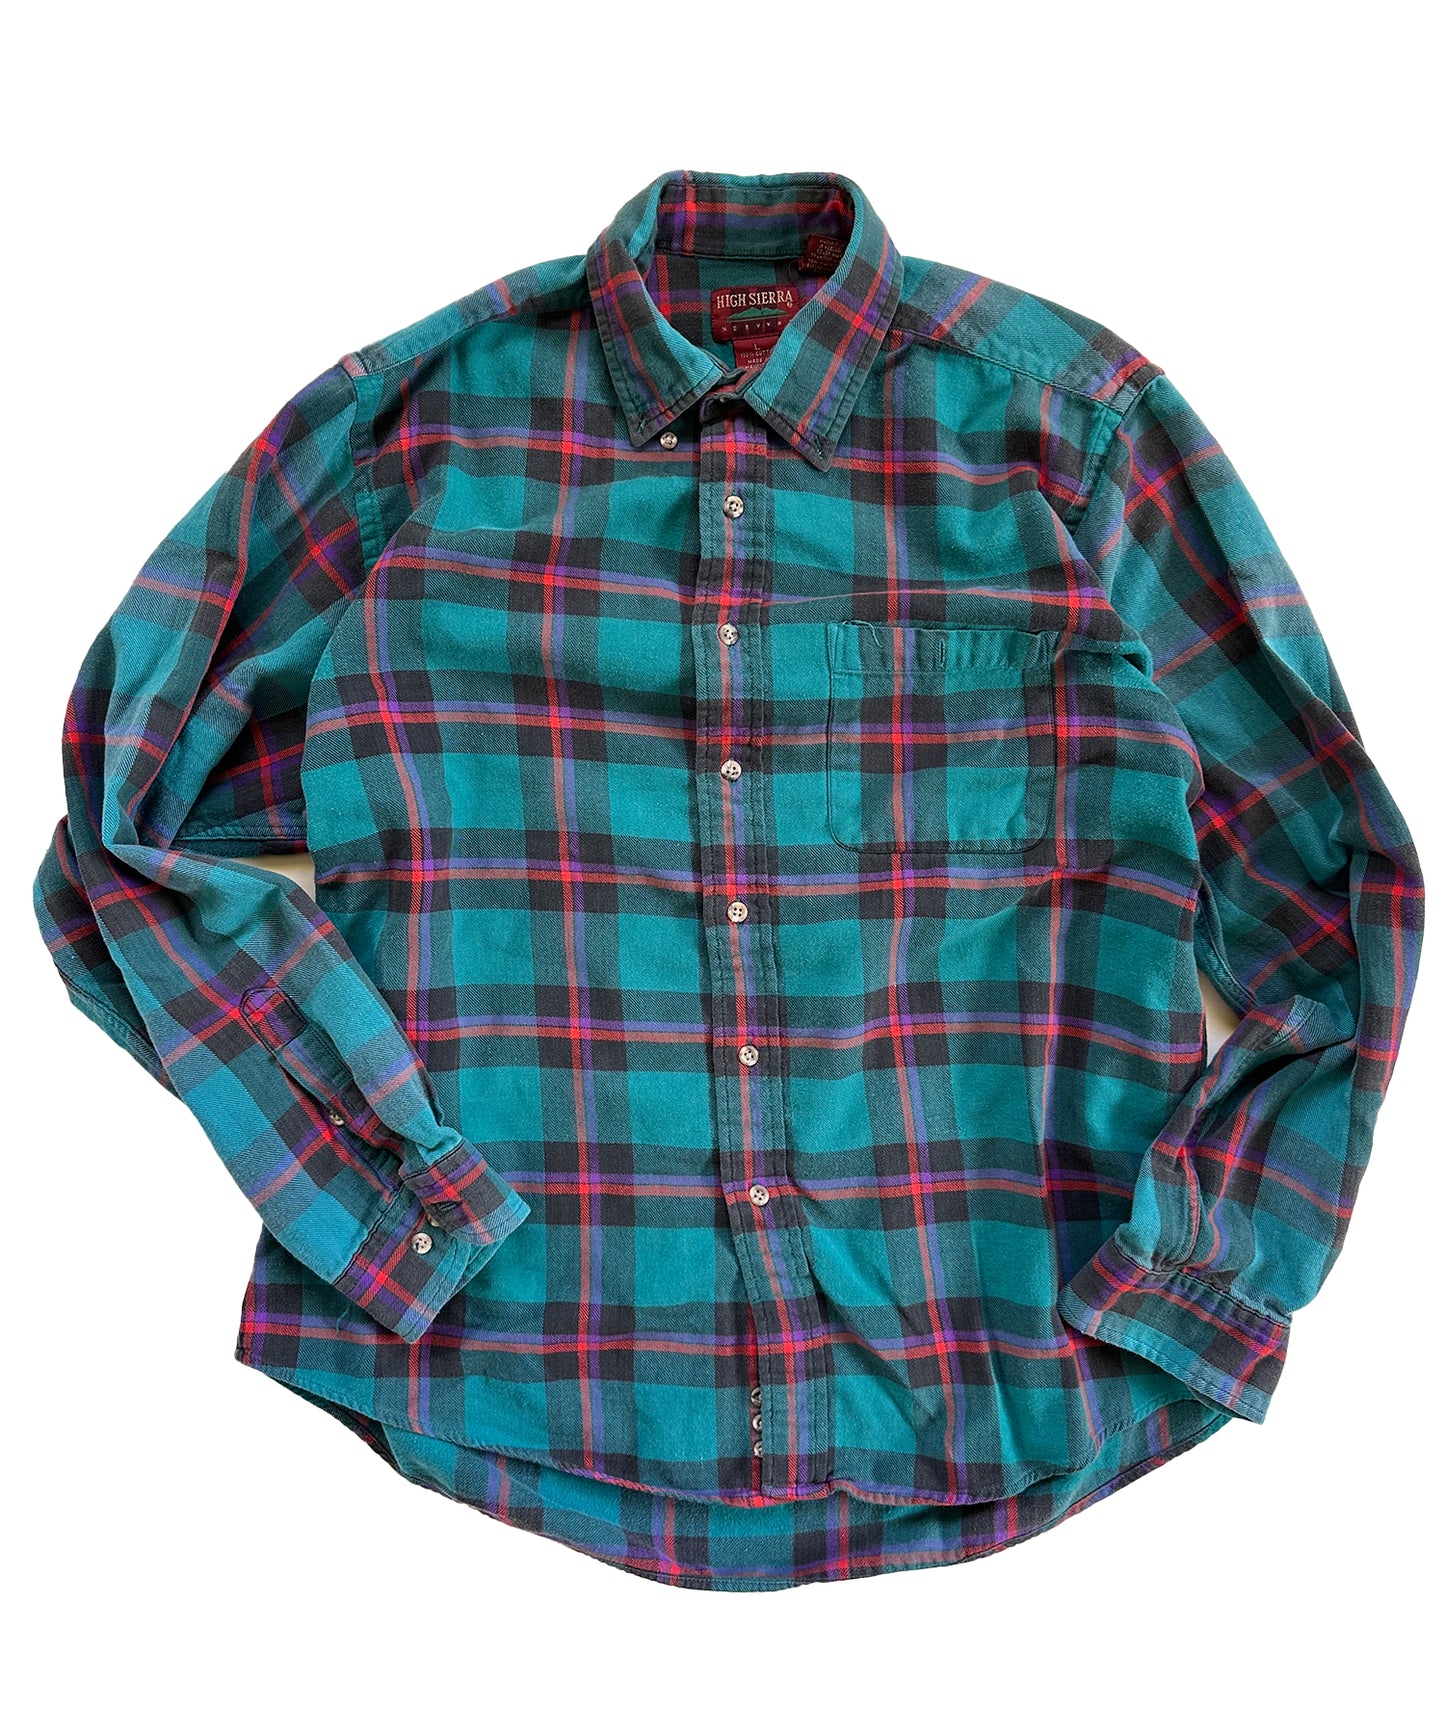 High Sierra Flannel Shirt (Large)